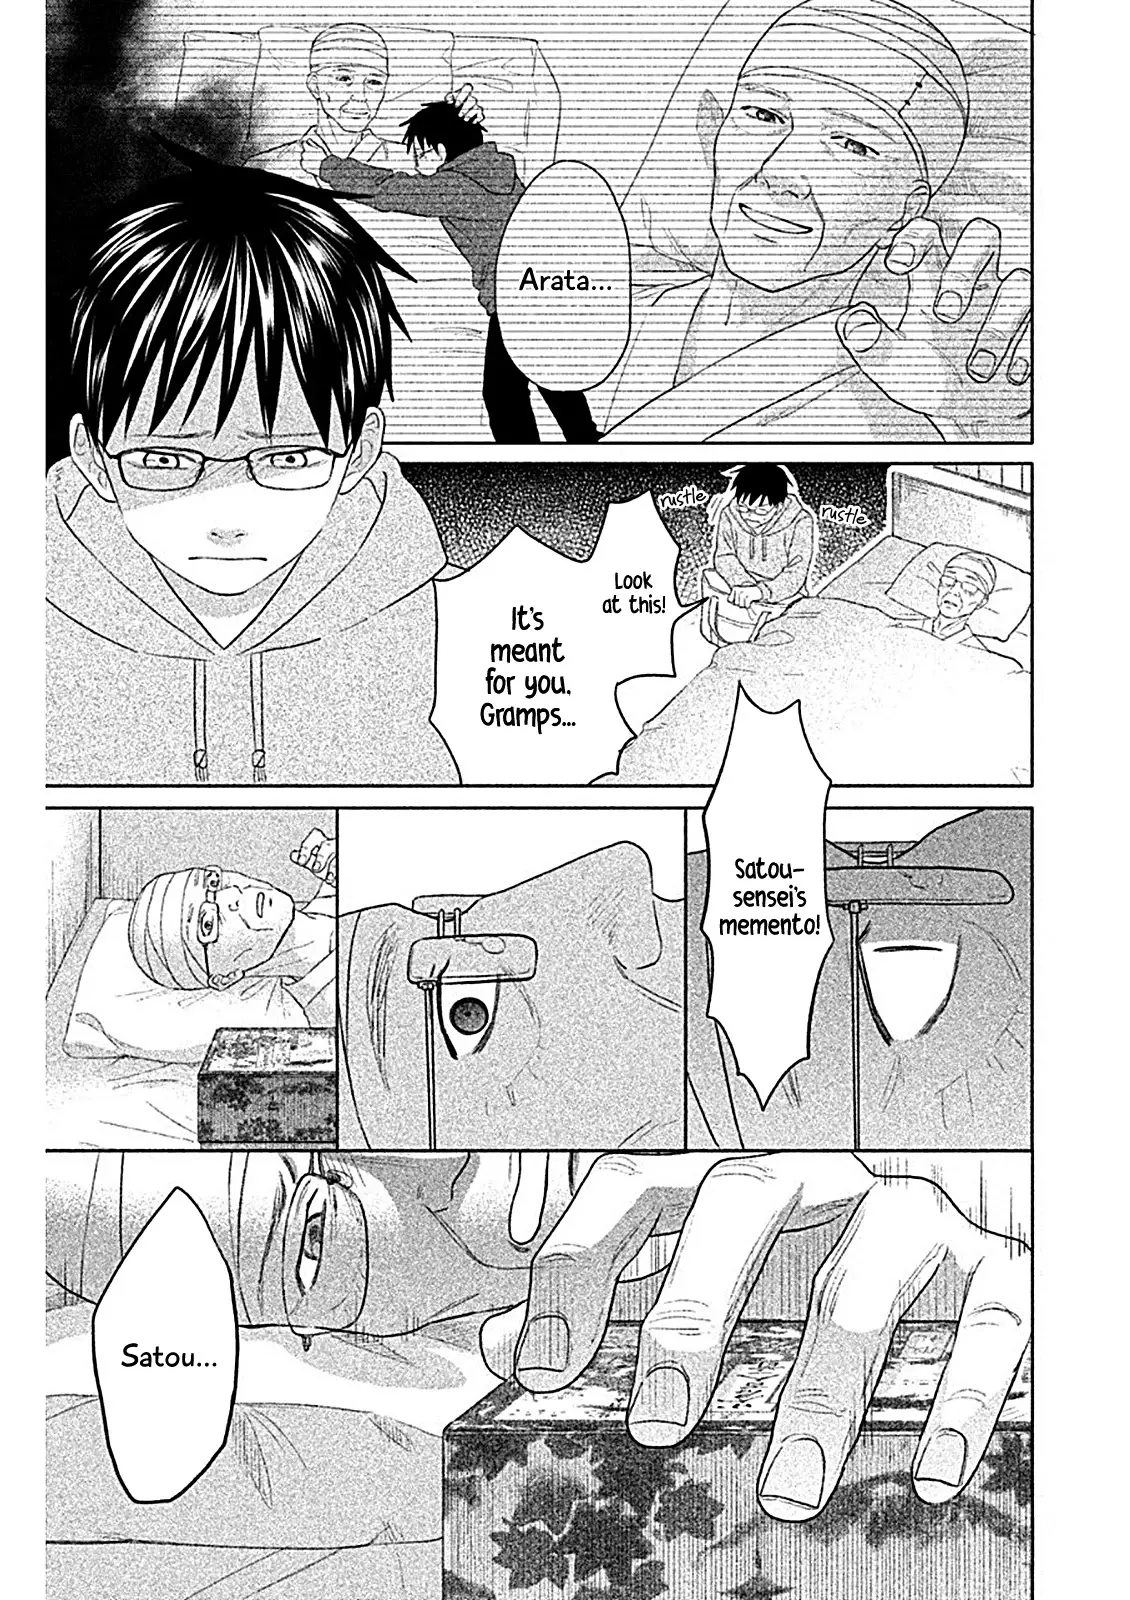 Chihayafuru: Middle School Arc - 7 page 29